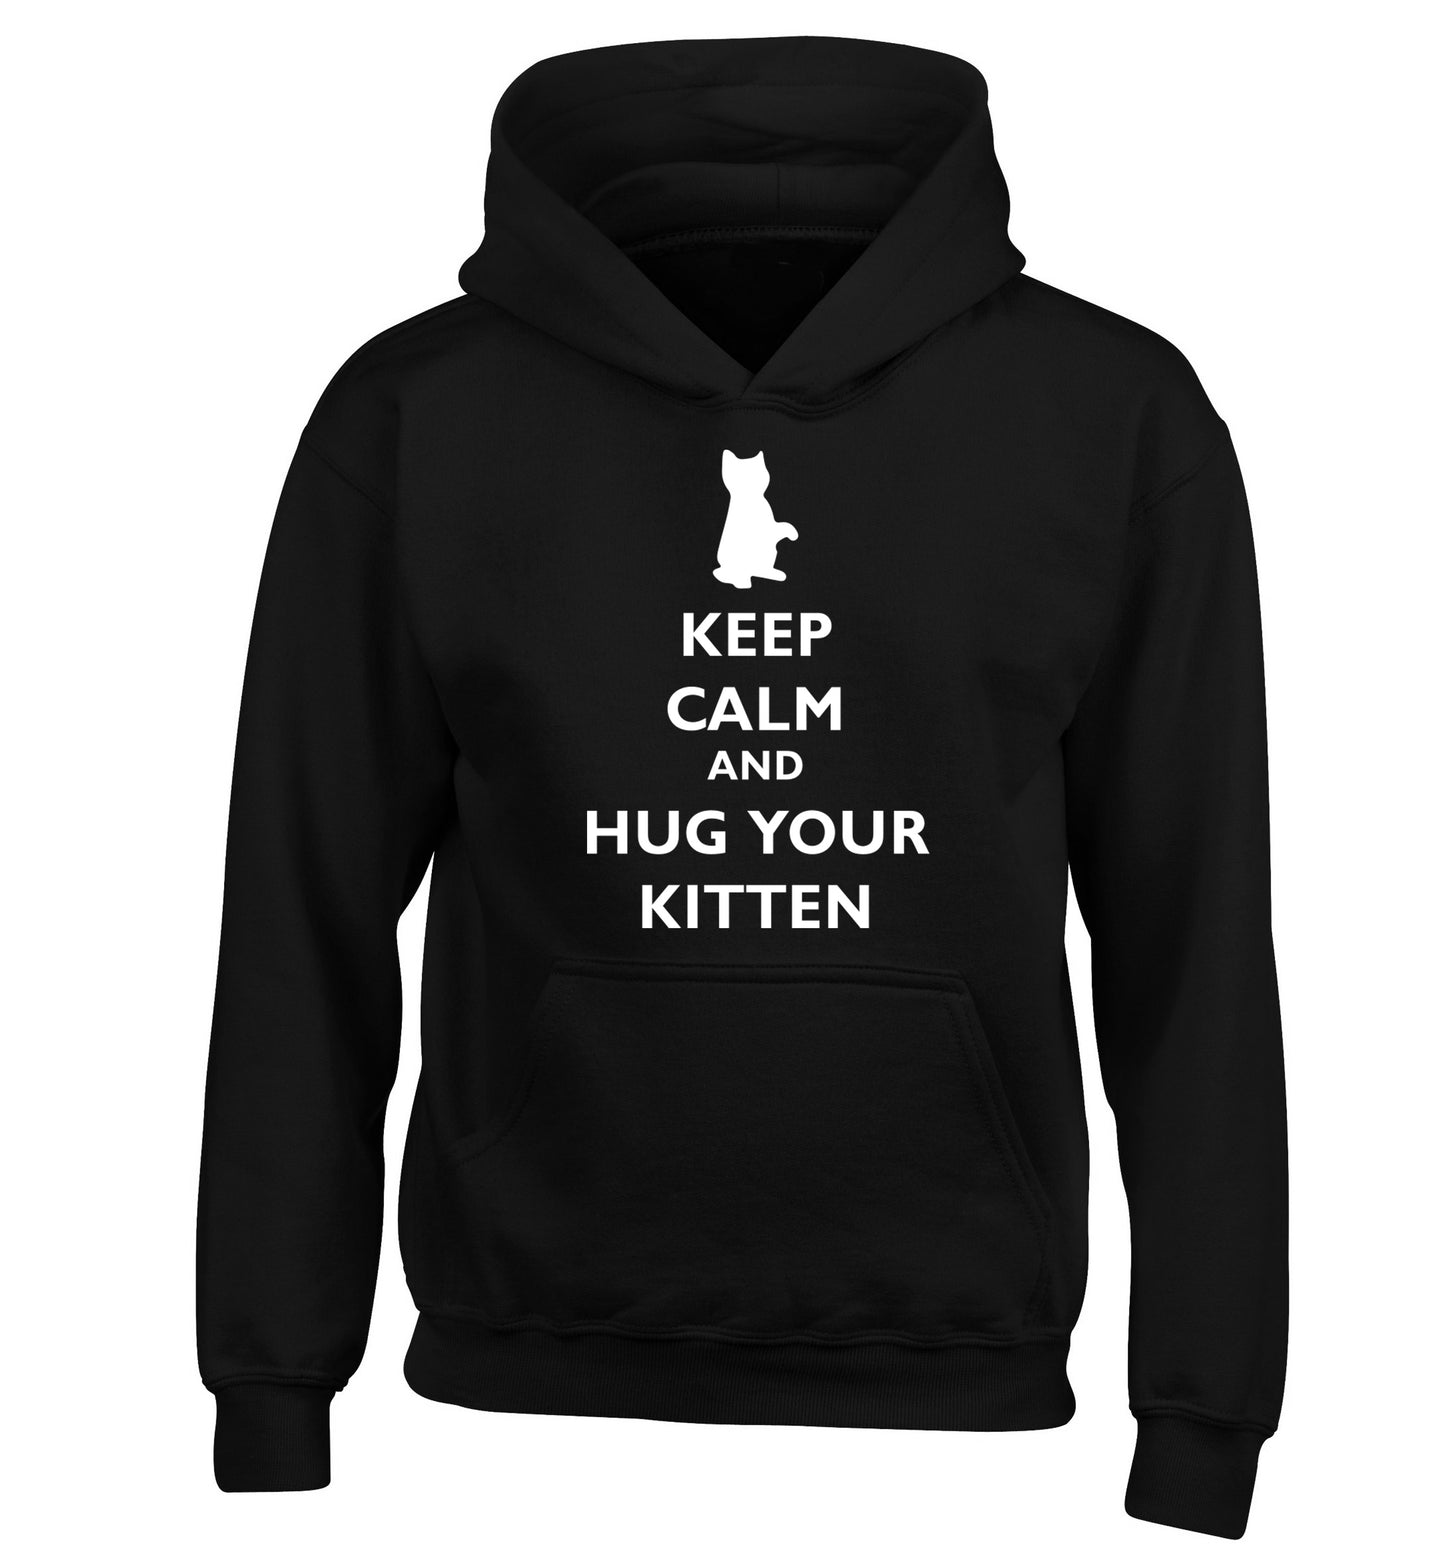 Keep calm and hug your kitten children's black hoodie 12-13 Years